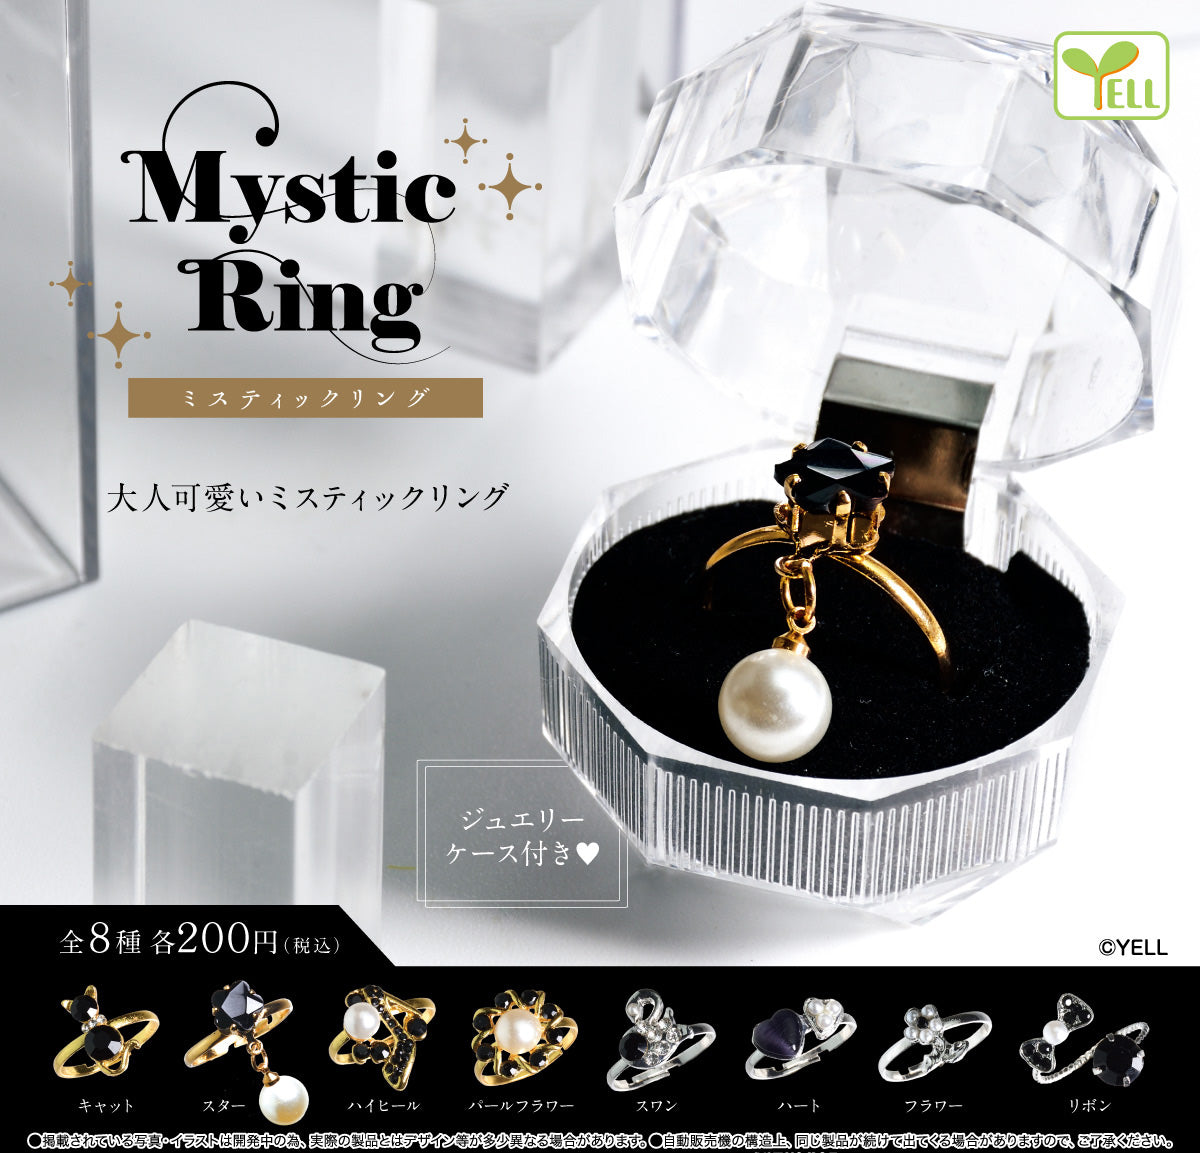 Mystic Ring Capsule Toy (Bag)